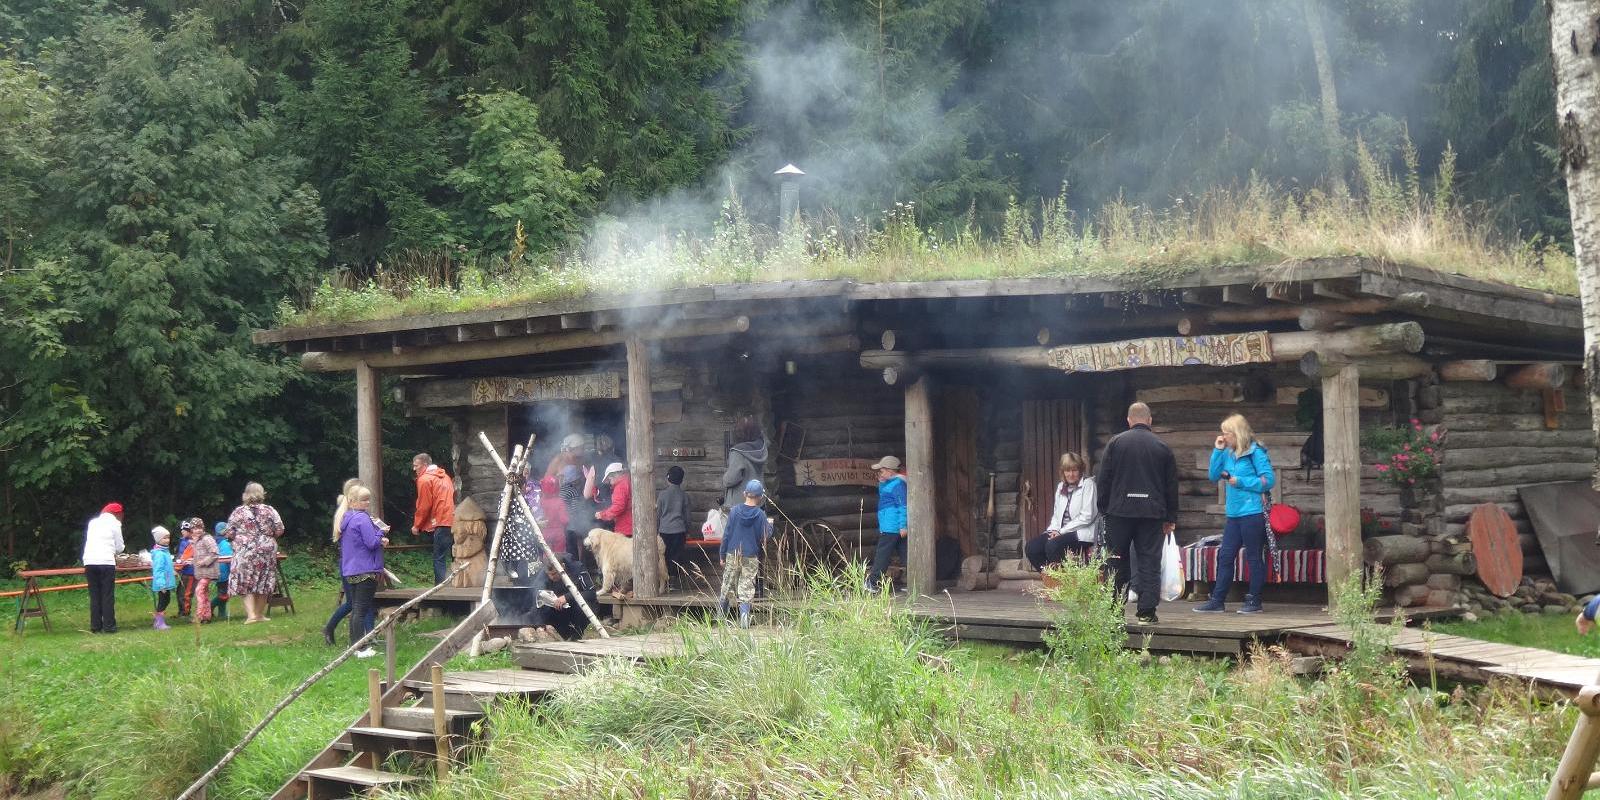 Excursion in Mooska Farm introducing the spiritual heritage of the smoke sauna of Vana-Võrumaa